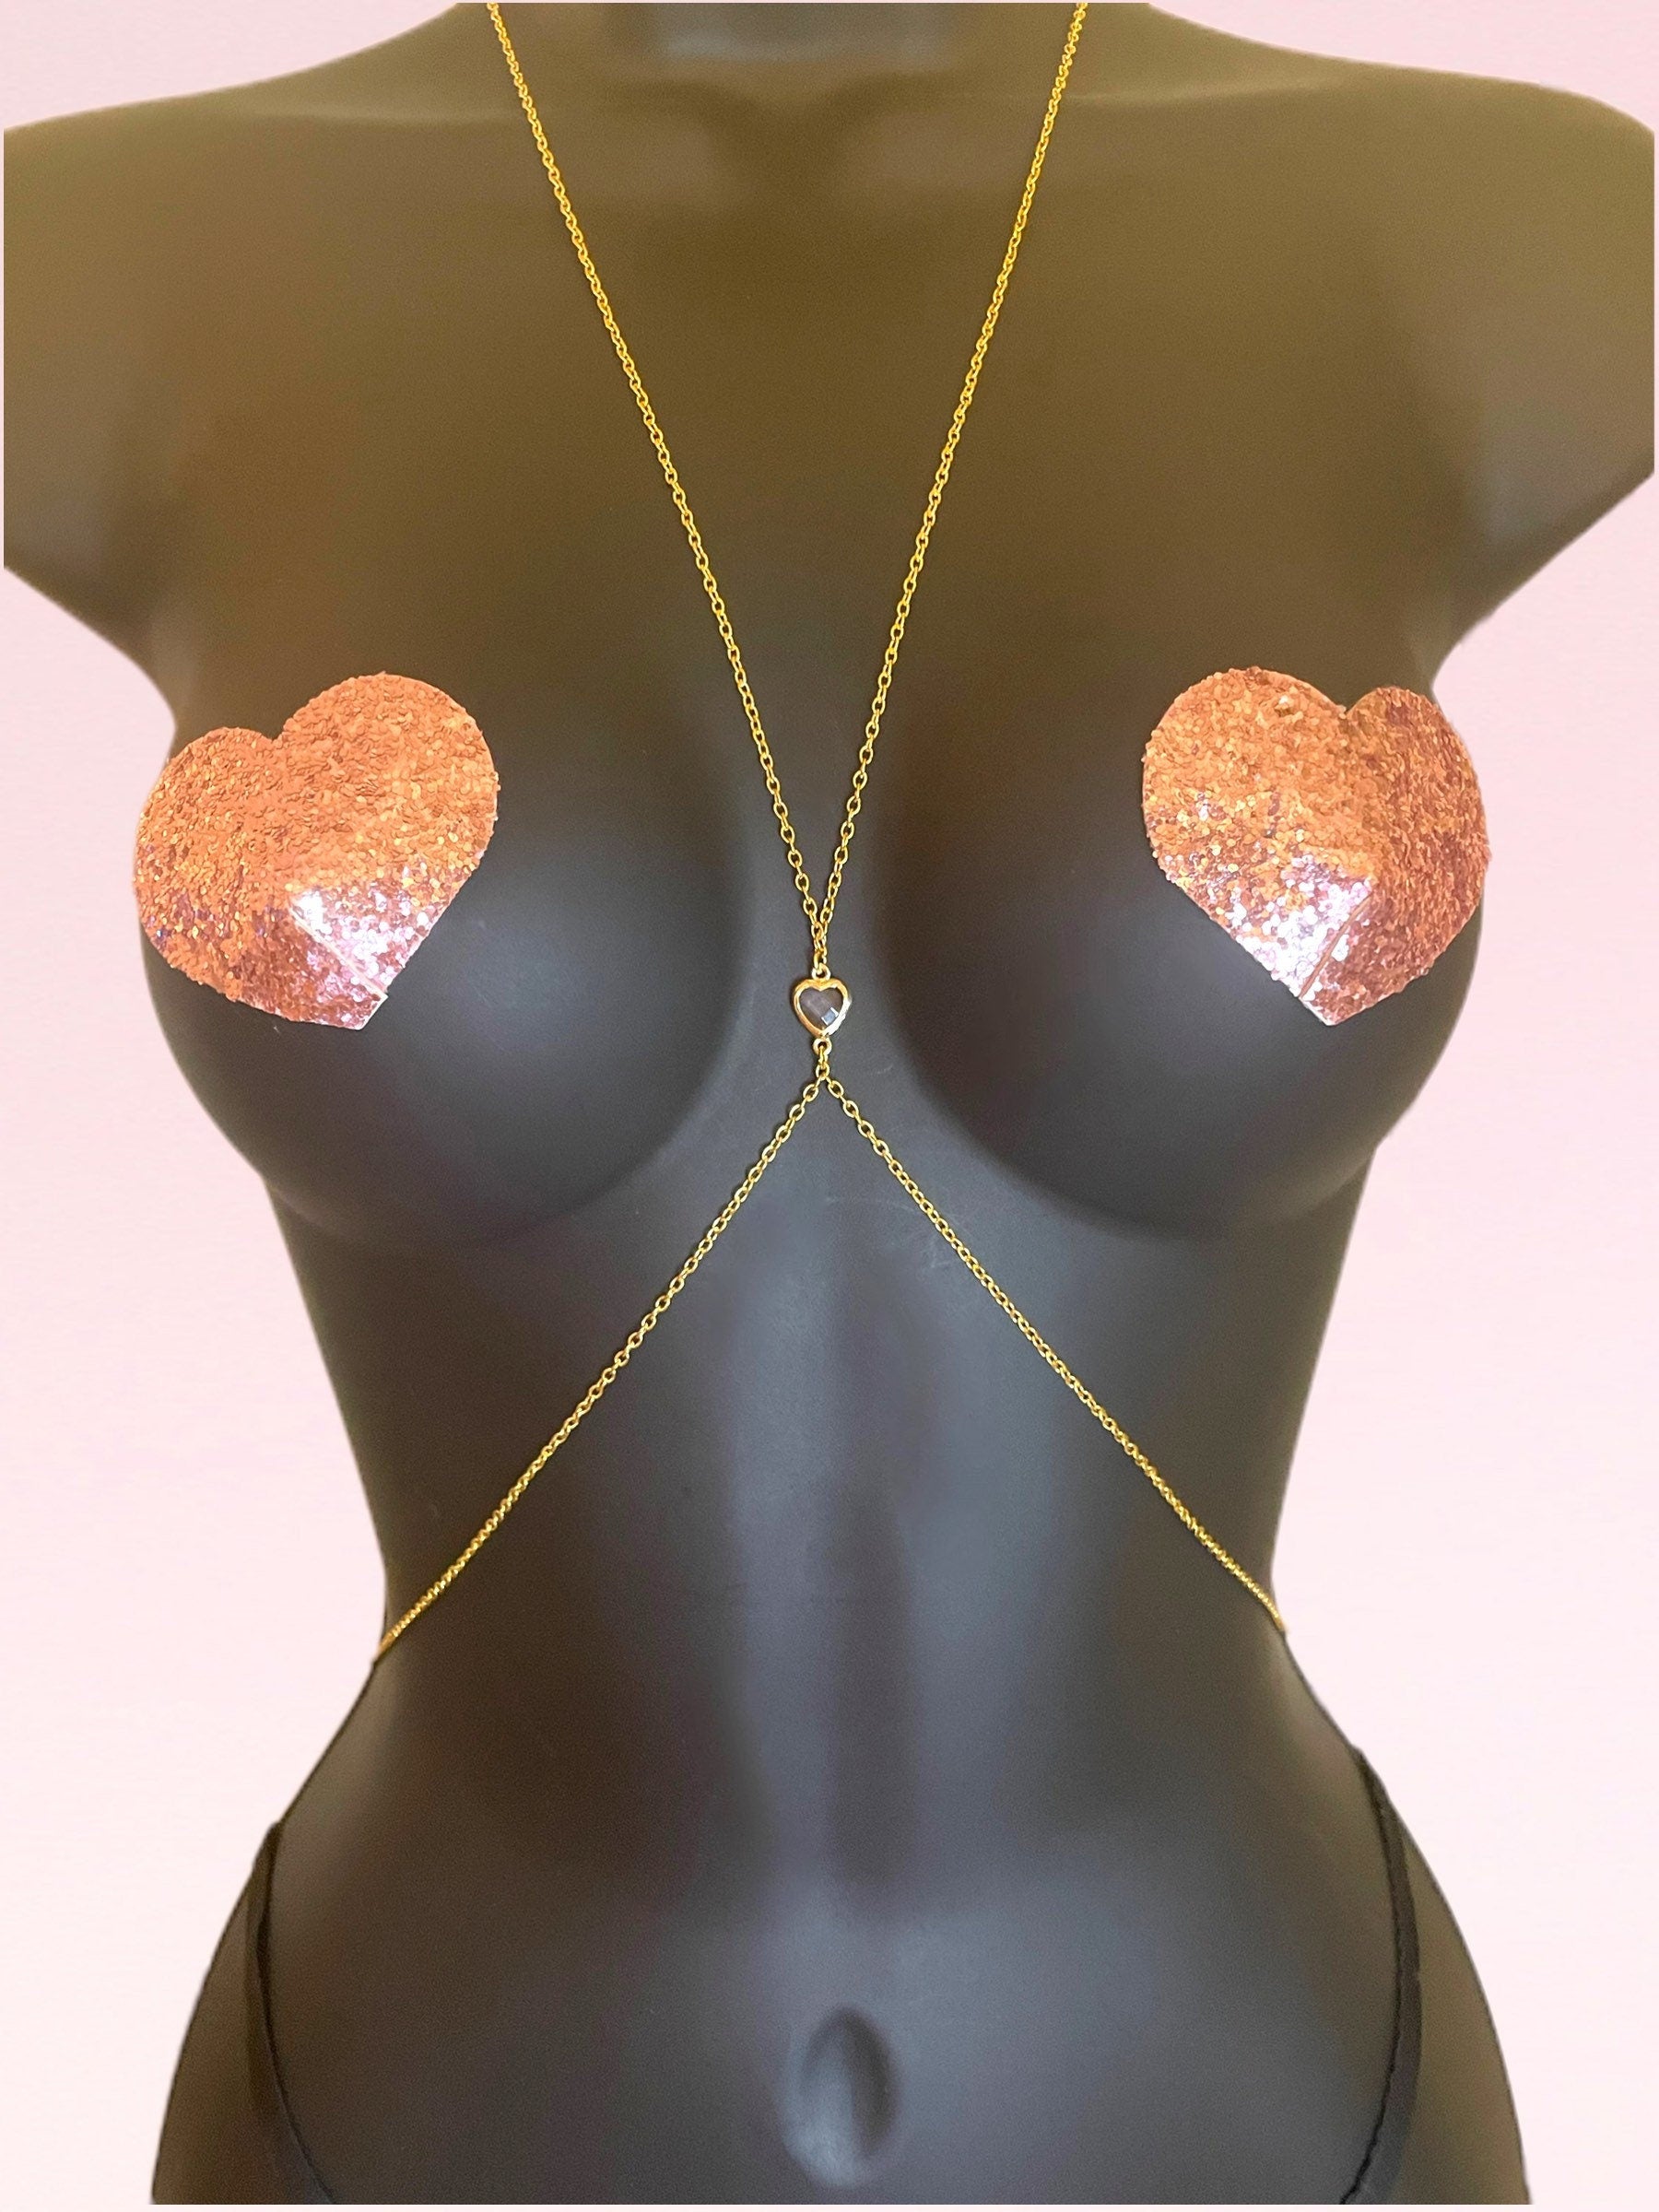 Heart shaped body chain